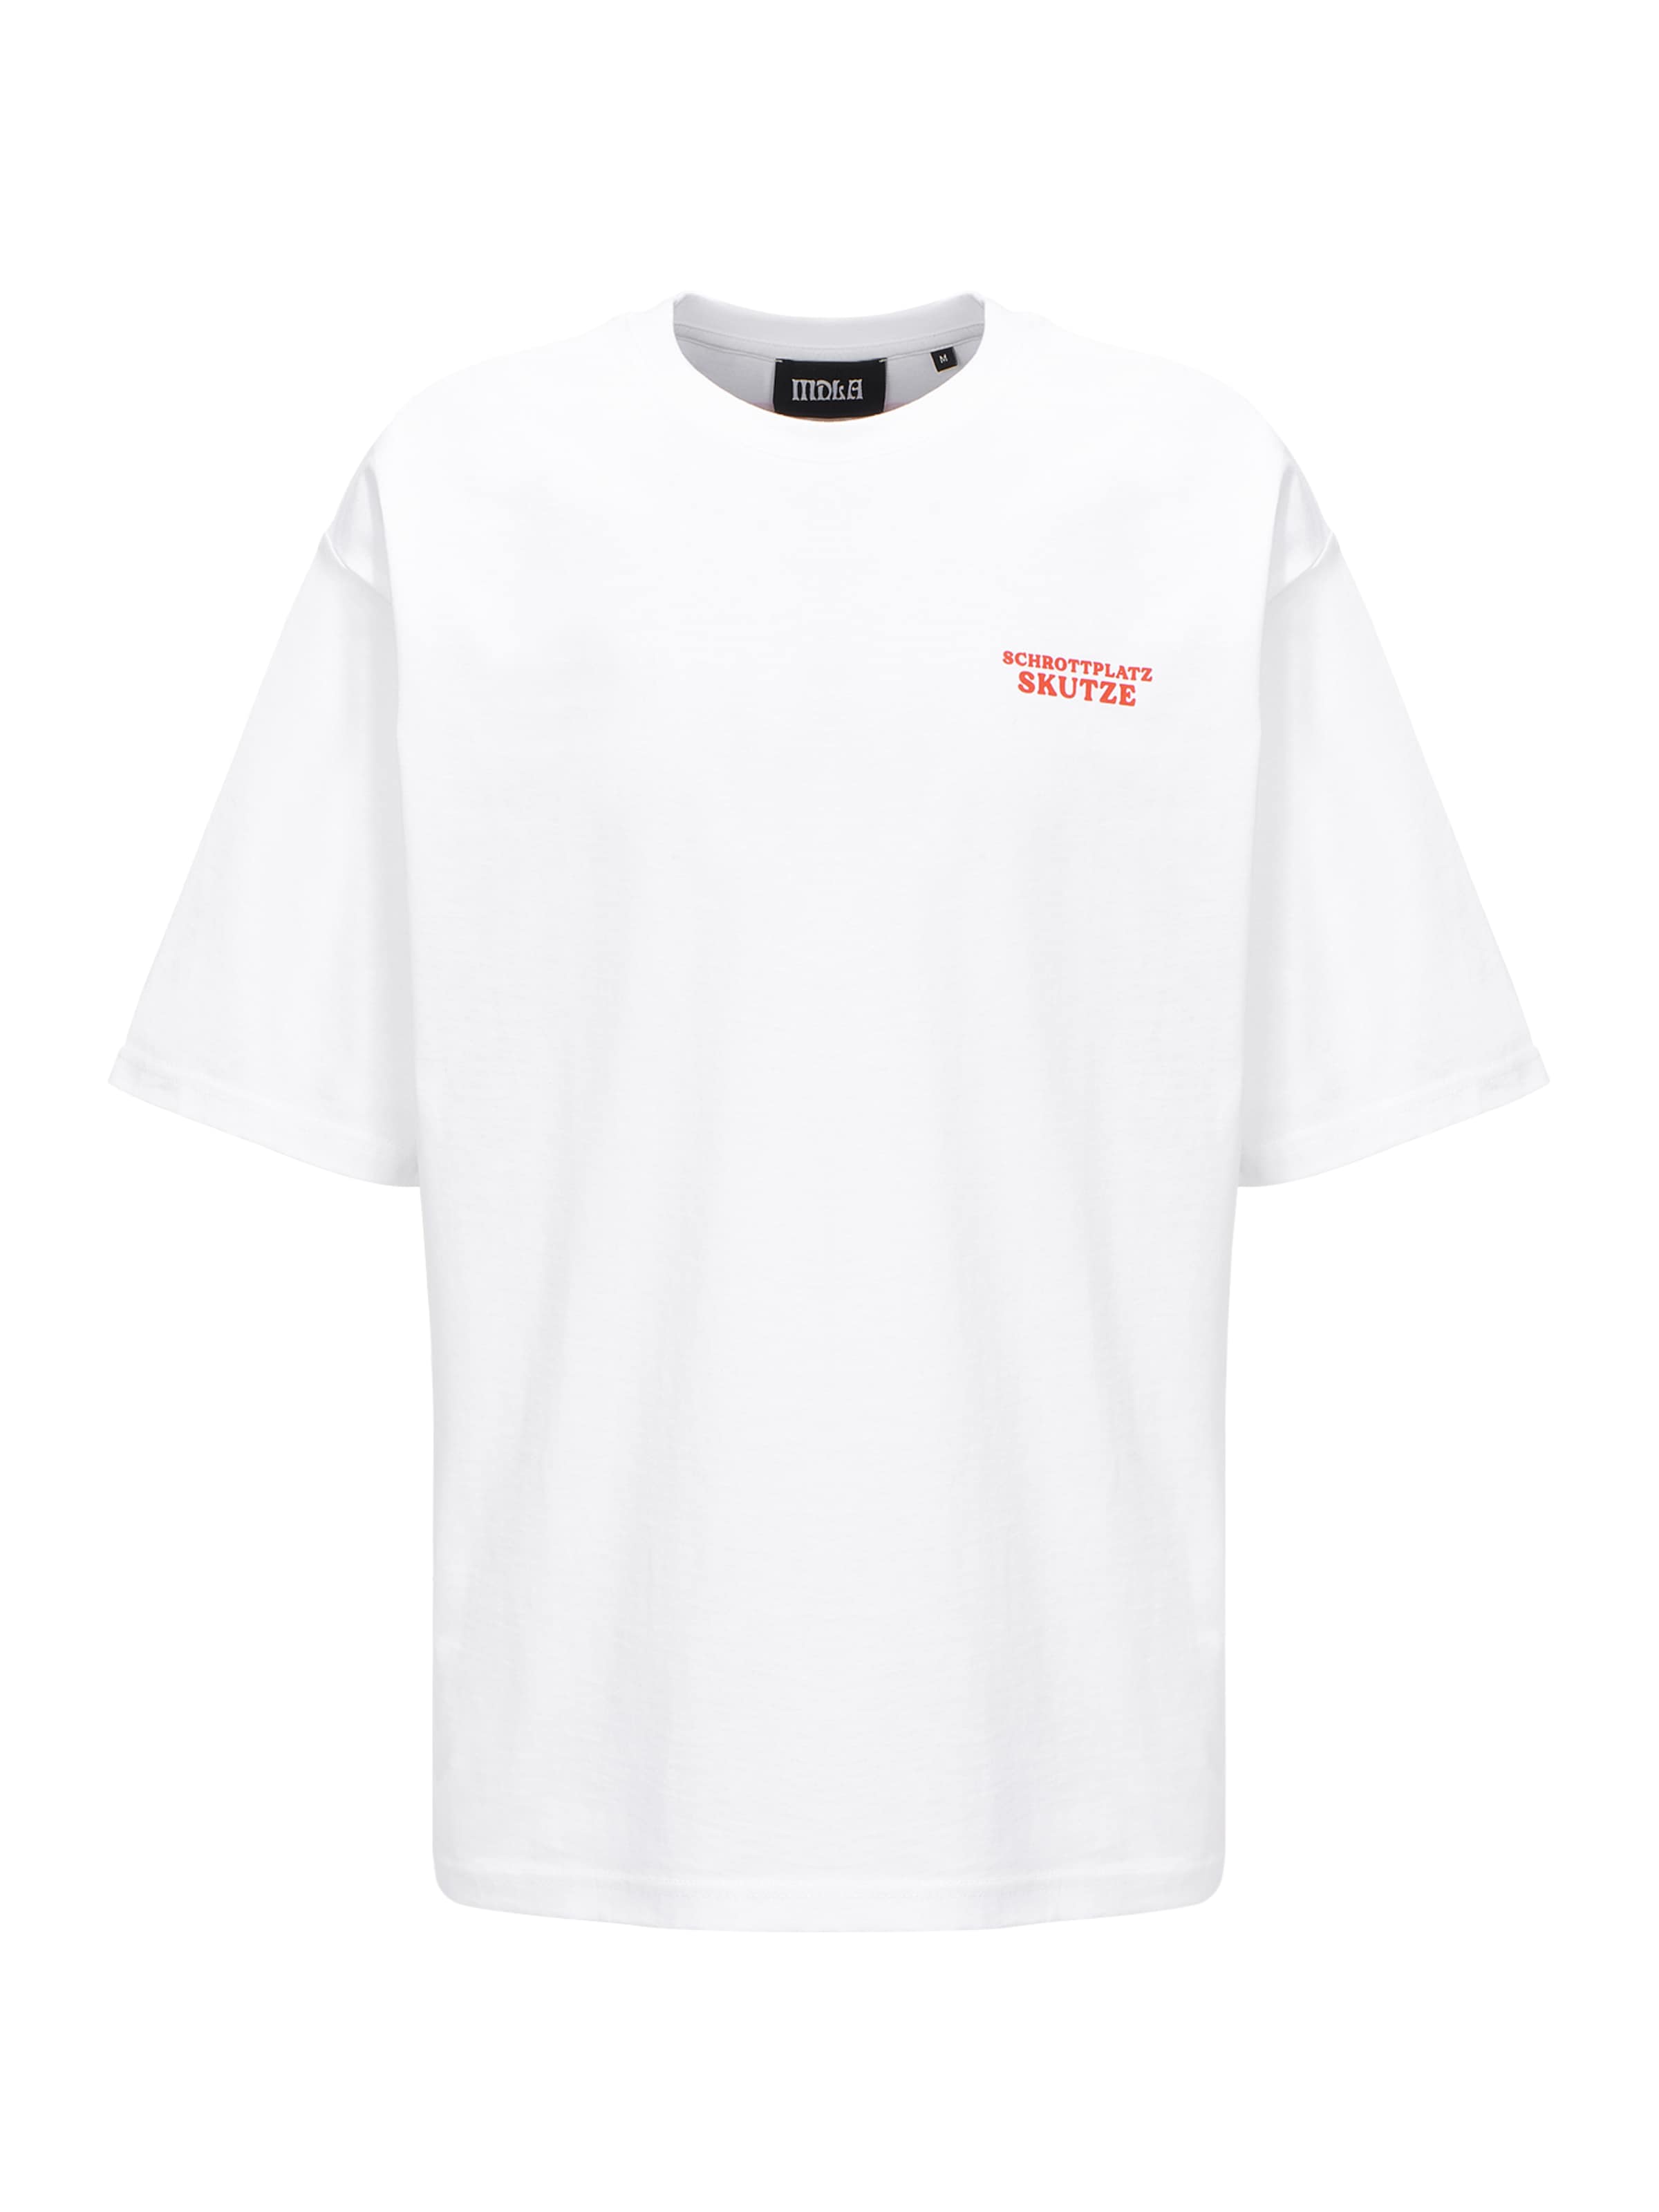 Women Plus sizes | Magdeburg Los Angeles Shirt 'Schrottplatz Skutze' in White - RK86130